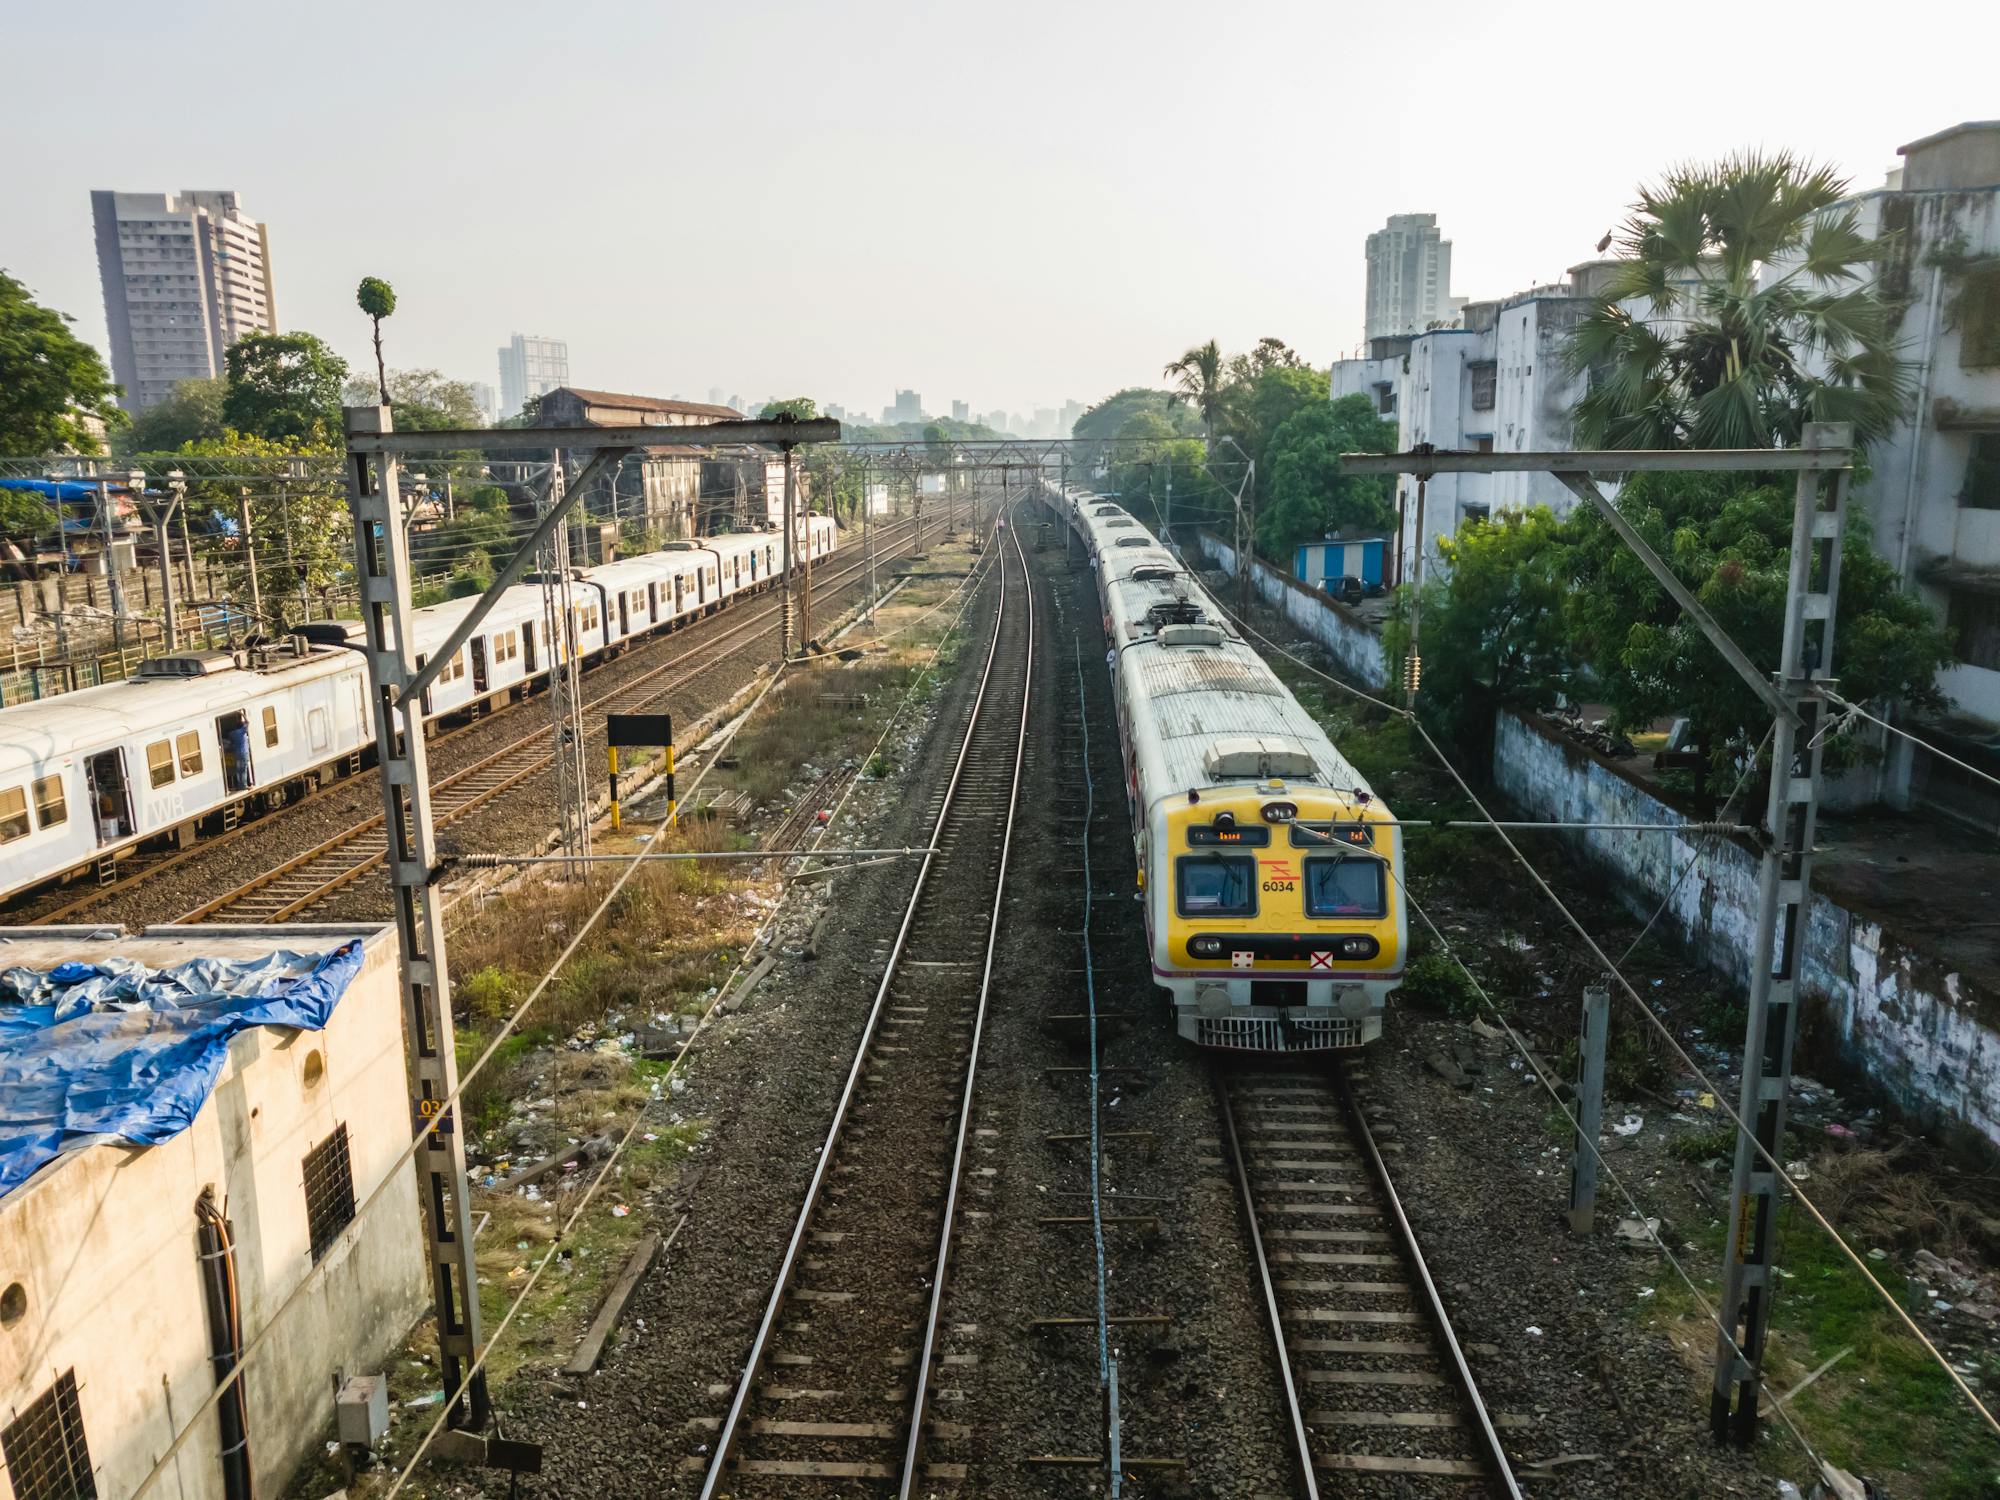 Mumbai Photo by Balaji Srinivasan from Pexels: https://www.pexels.com/photo/city-road-traffic-train-4805704/